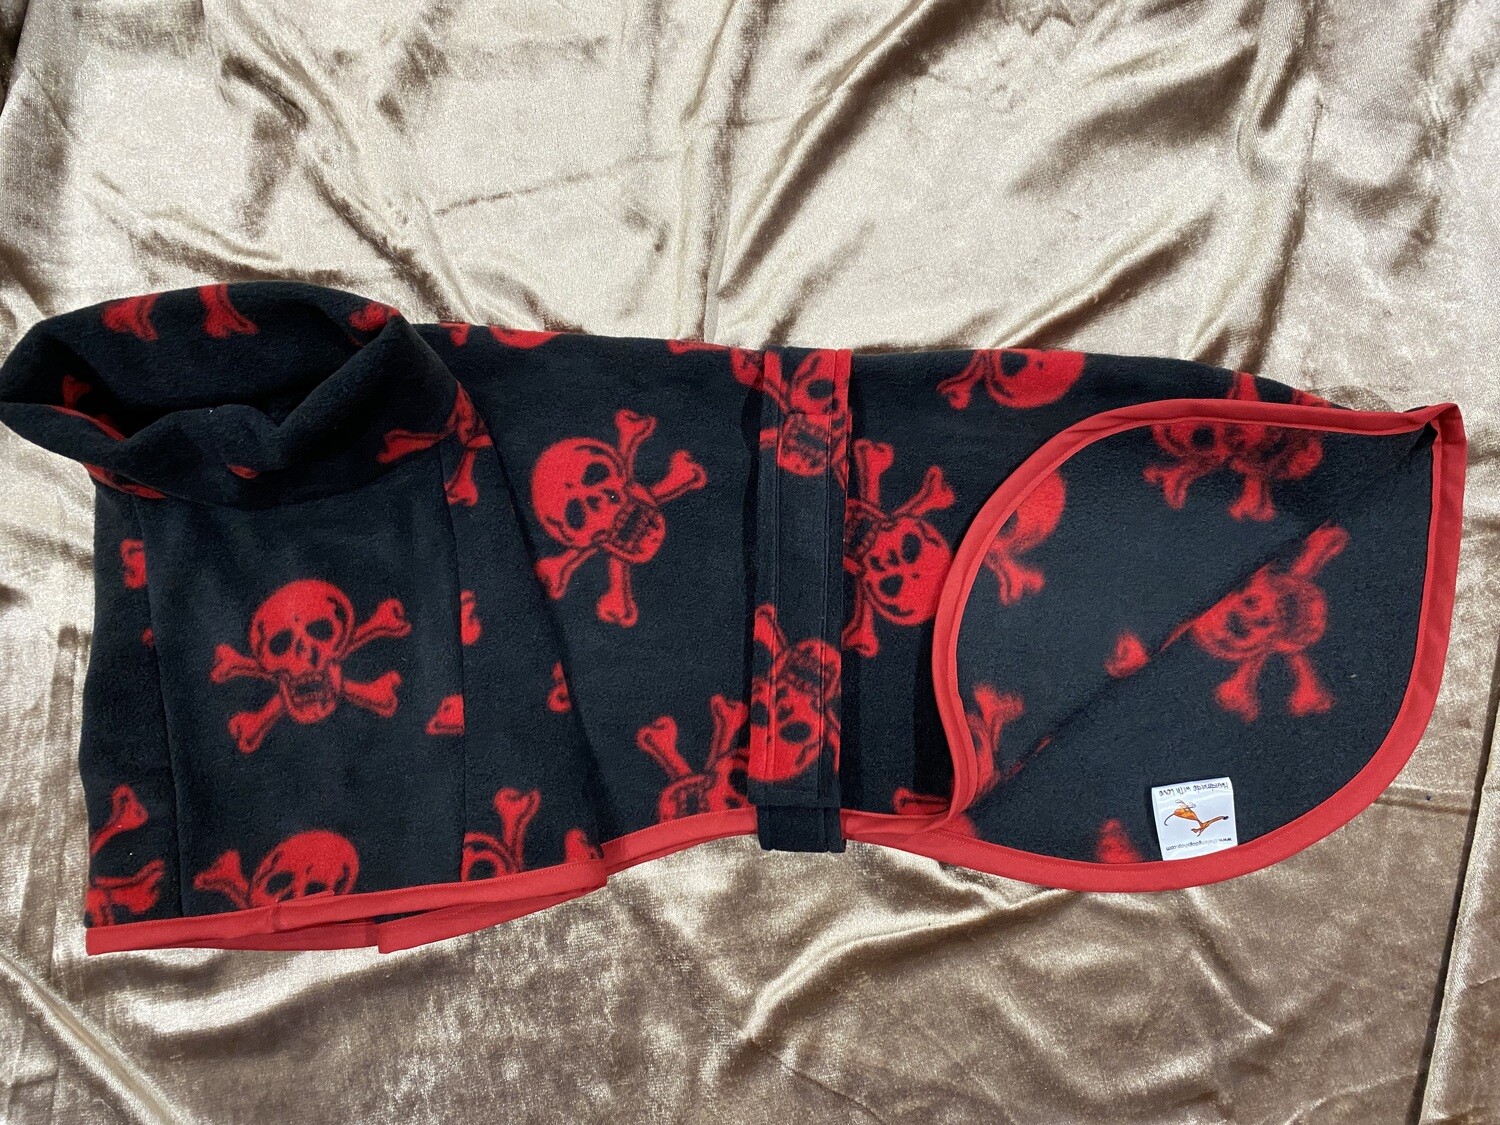 HANDMADE WITH LOVE - Red Skull & Crossbones on Black Fleece with Red Binding - PRE-ORDER